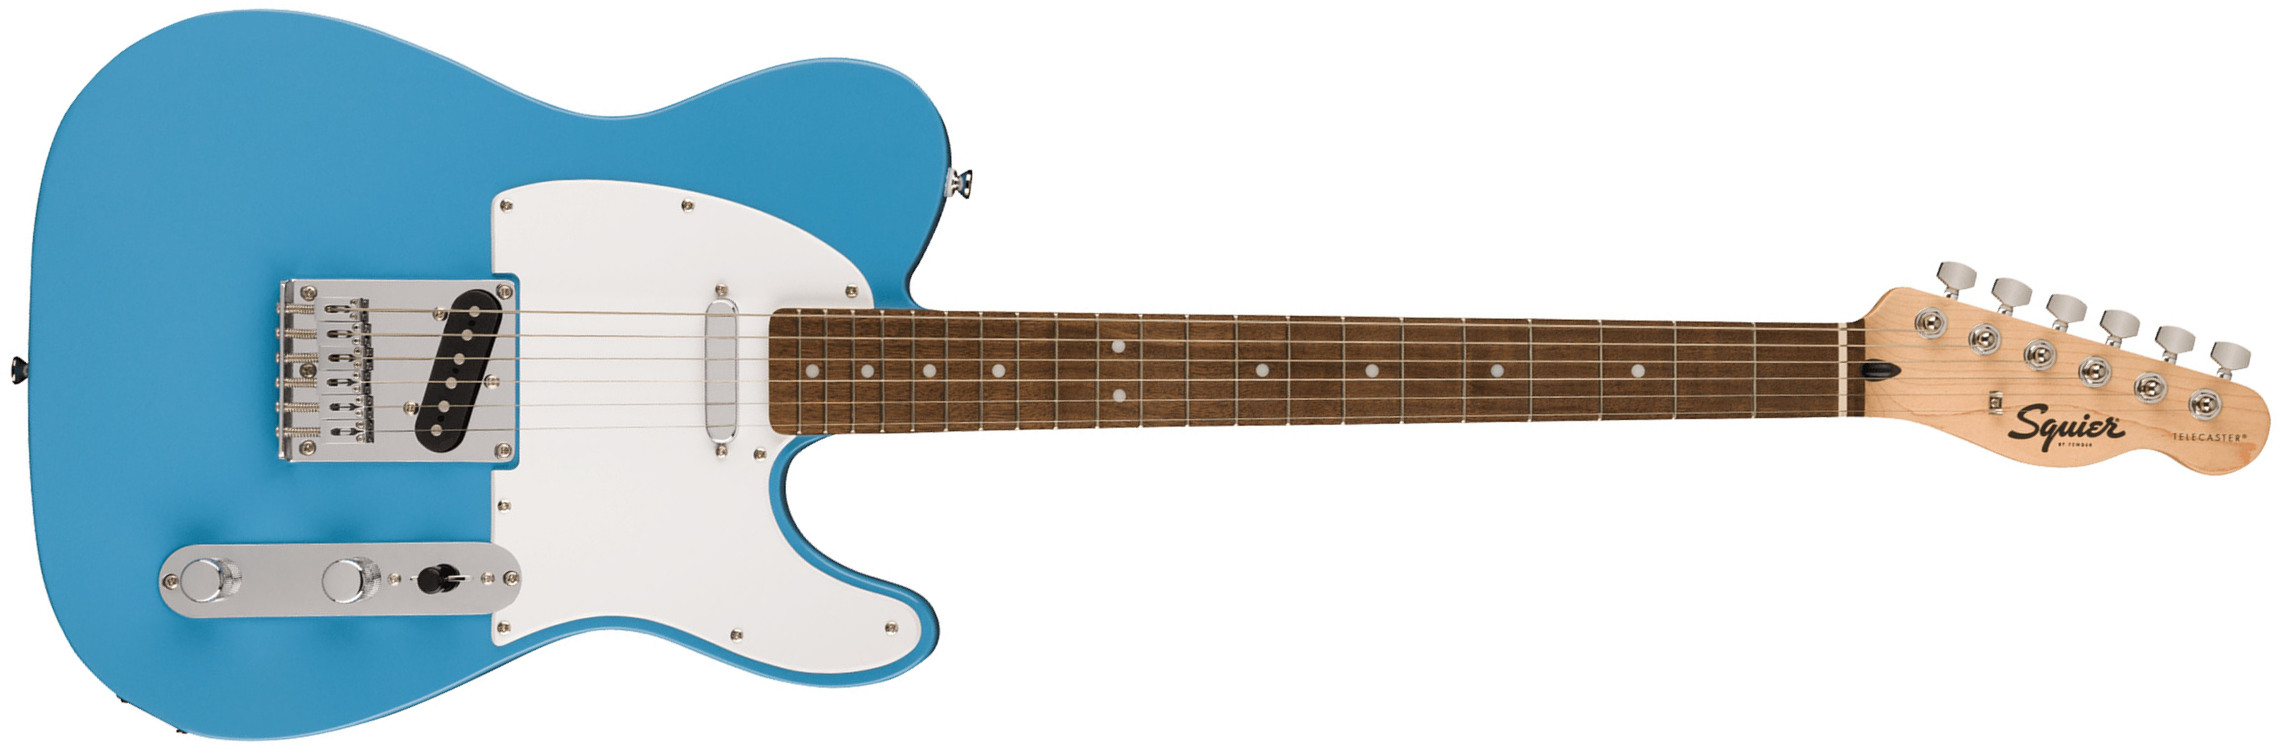 Squier Tele Sonic 2s Ht Lau - California Blue - Televorm elektrische gitaar - Main picture